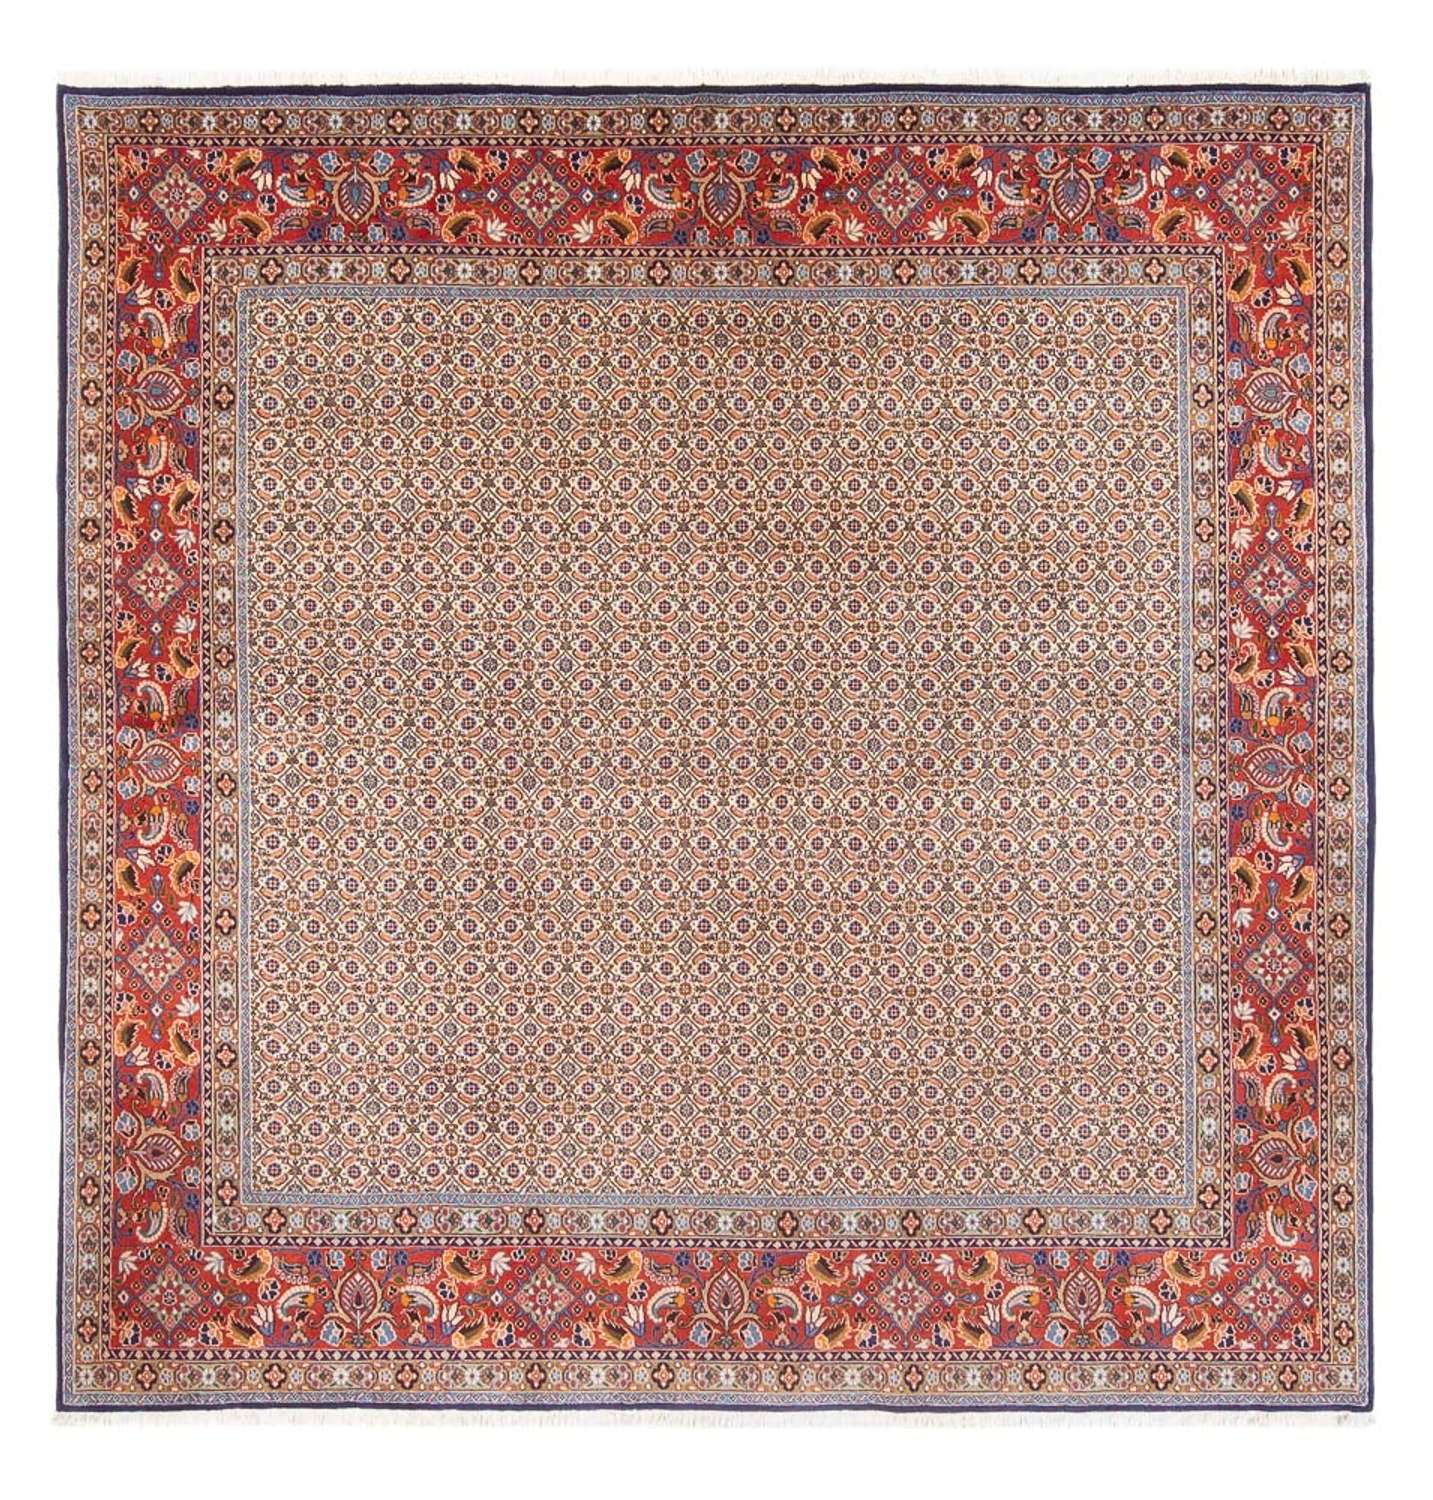 Tapete Persa - Clássico praça  - 242 x 247 cm - bege escuro